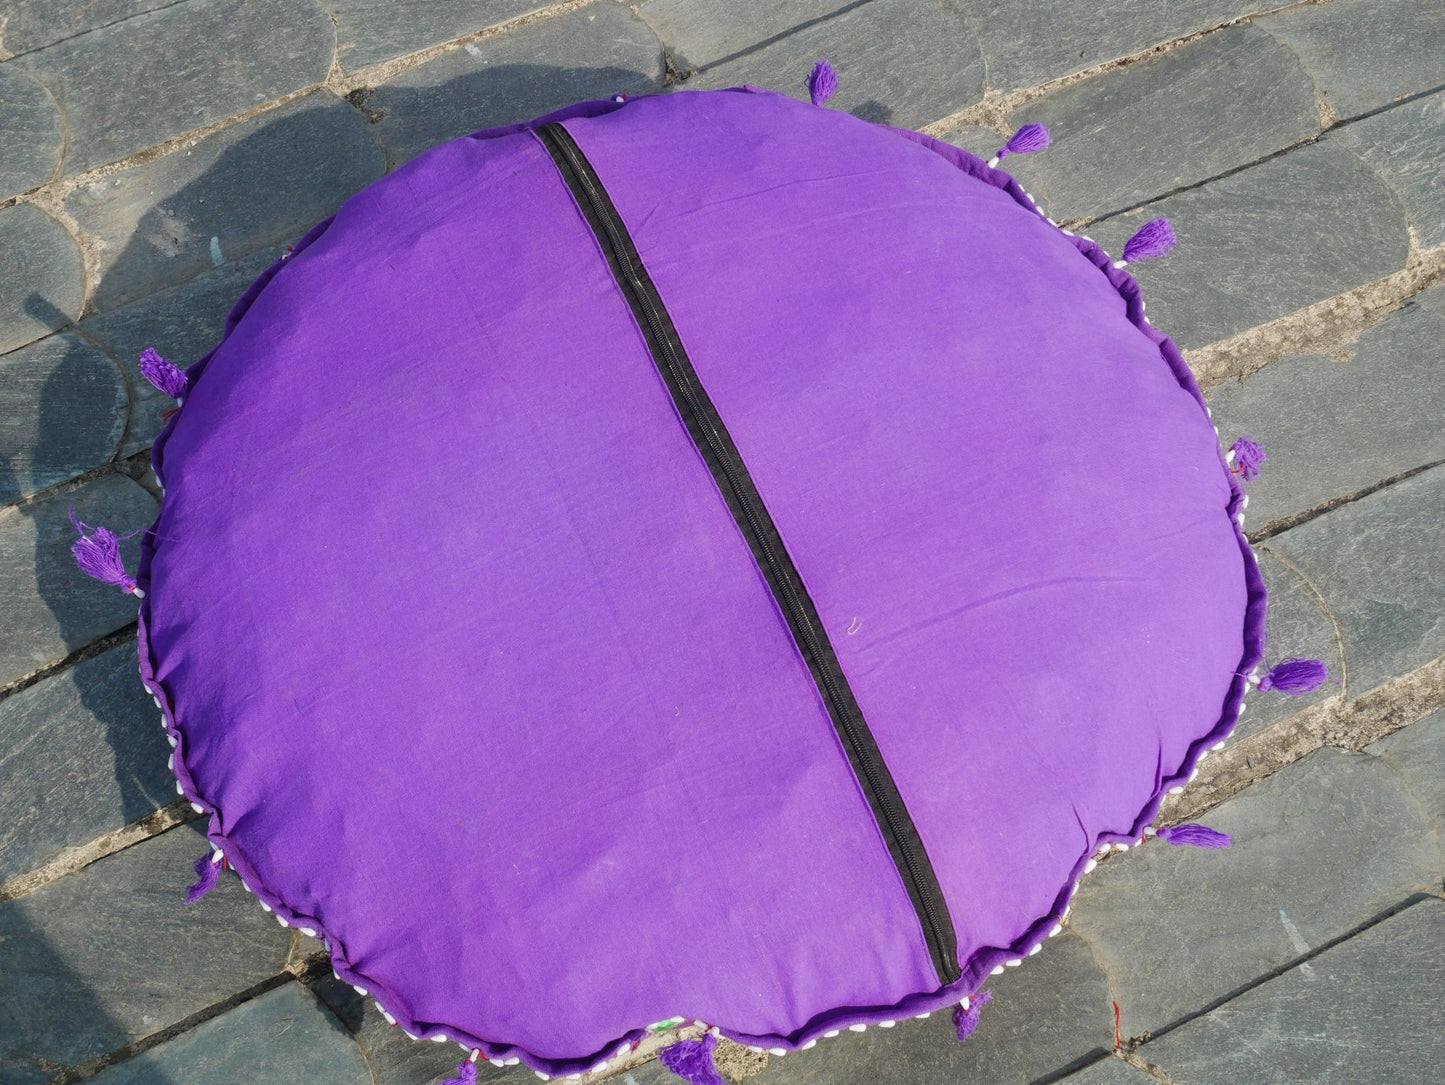 Floor cushion cover - Indian floor seating | Colorful meditation cushion - purple floor pillow